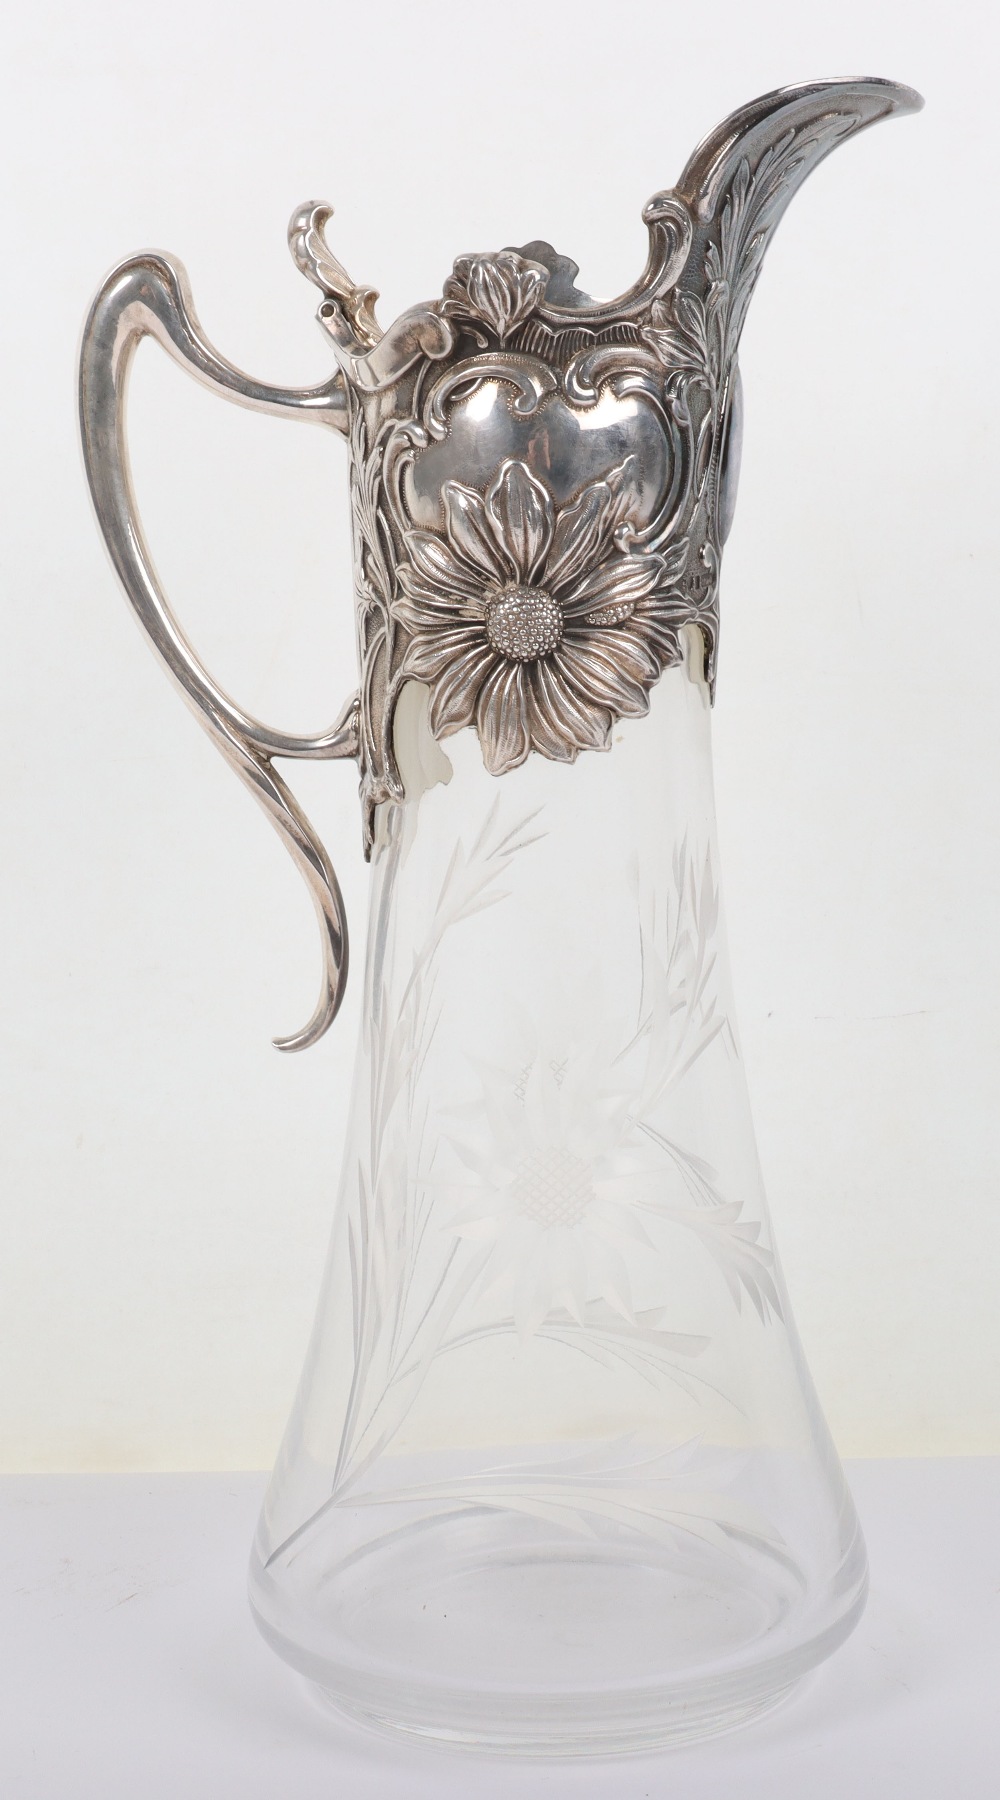 An Art Nouveau style silver and glass claret jug